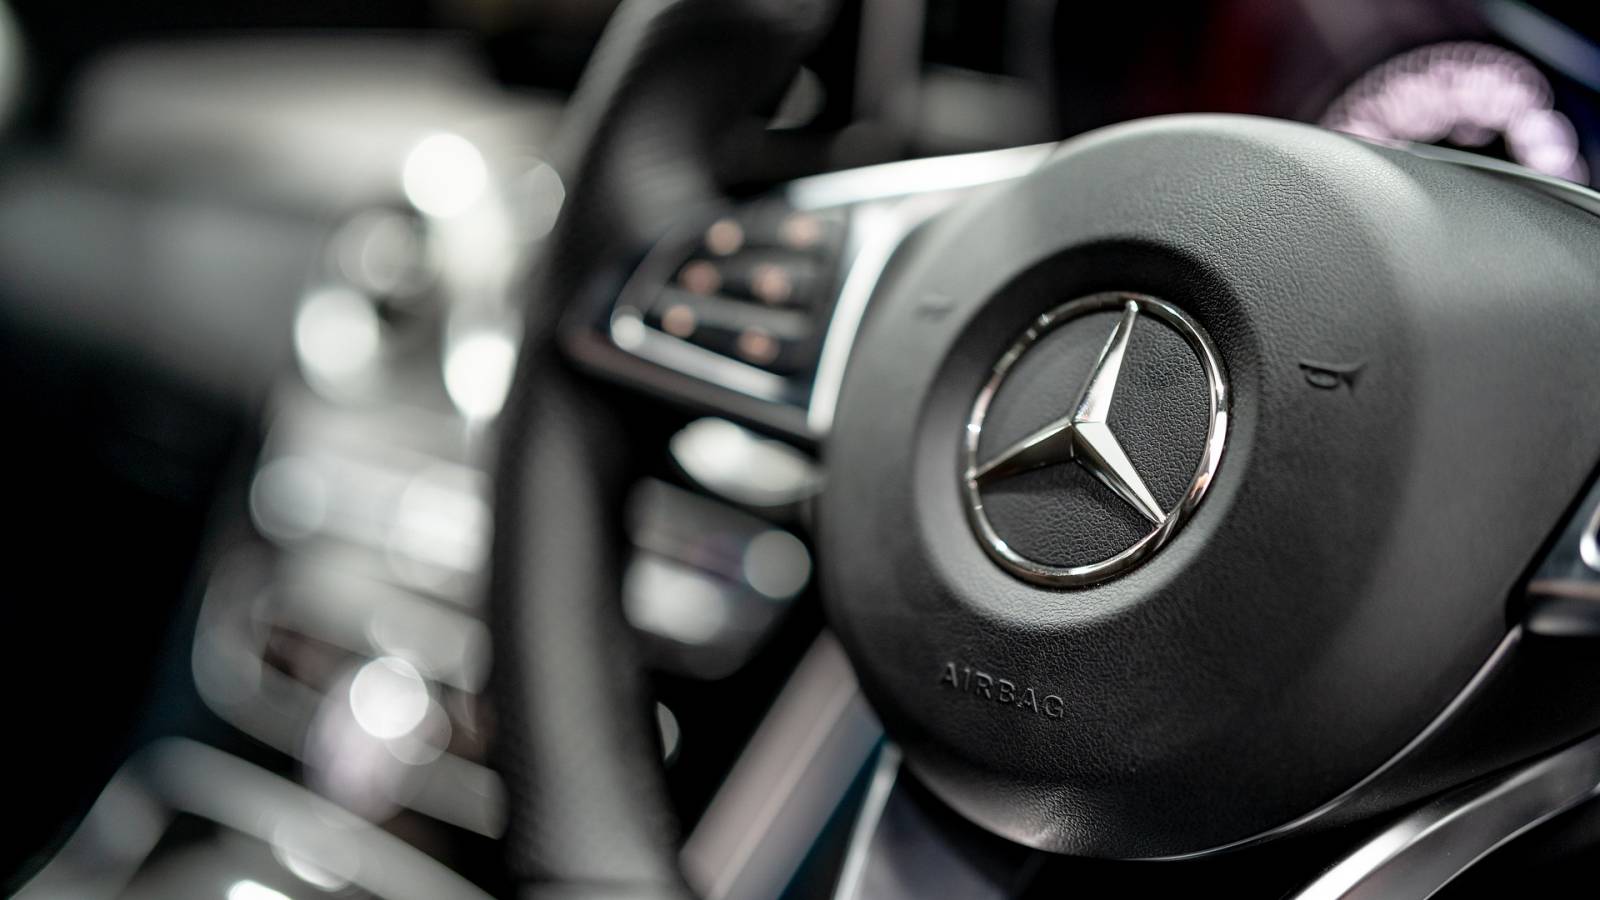 Mercedes-Benz Schimbare Majora Masinile Electrice